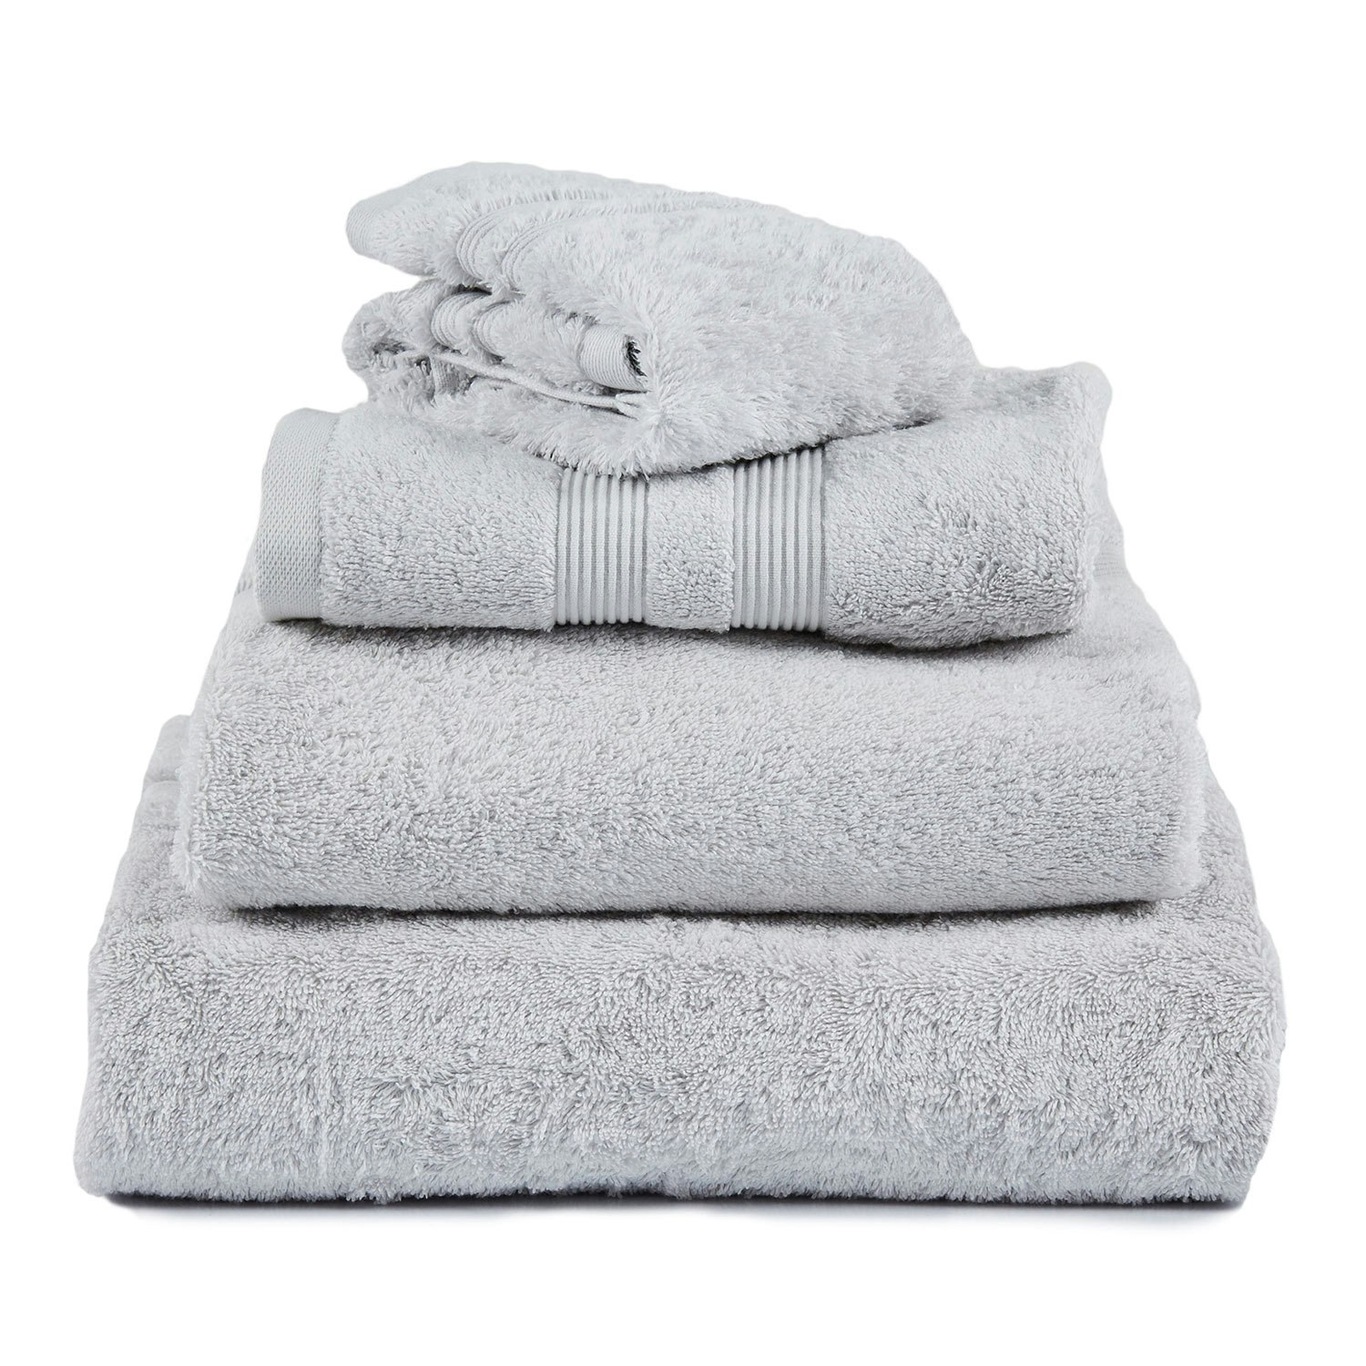 https://royaldesign.com/image/2/mille-notti-fontana-towel-eco-light-grey-3?w=800&quality=80